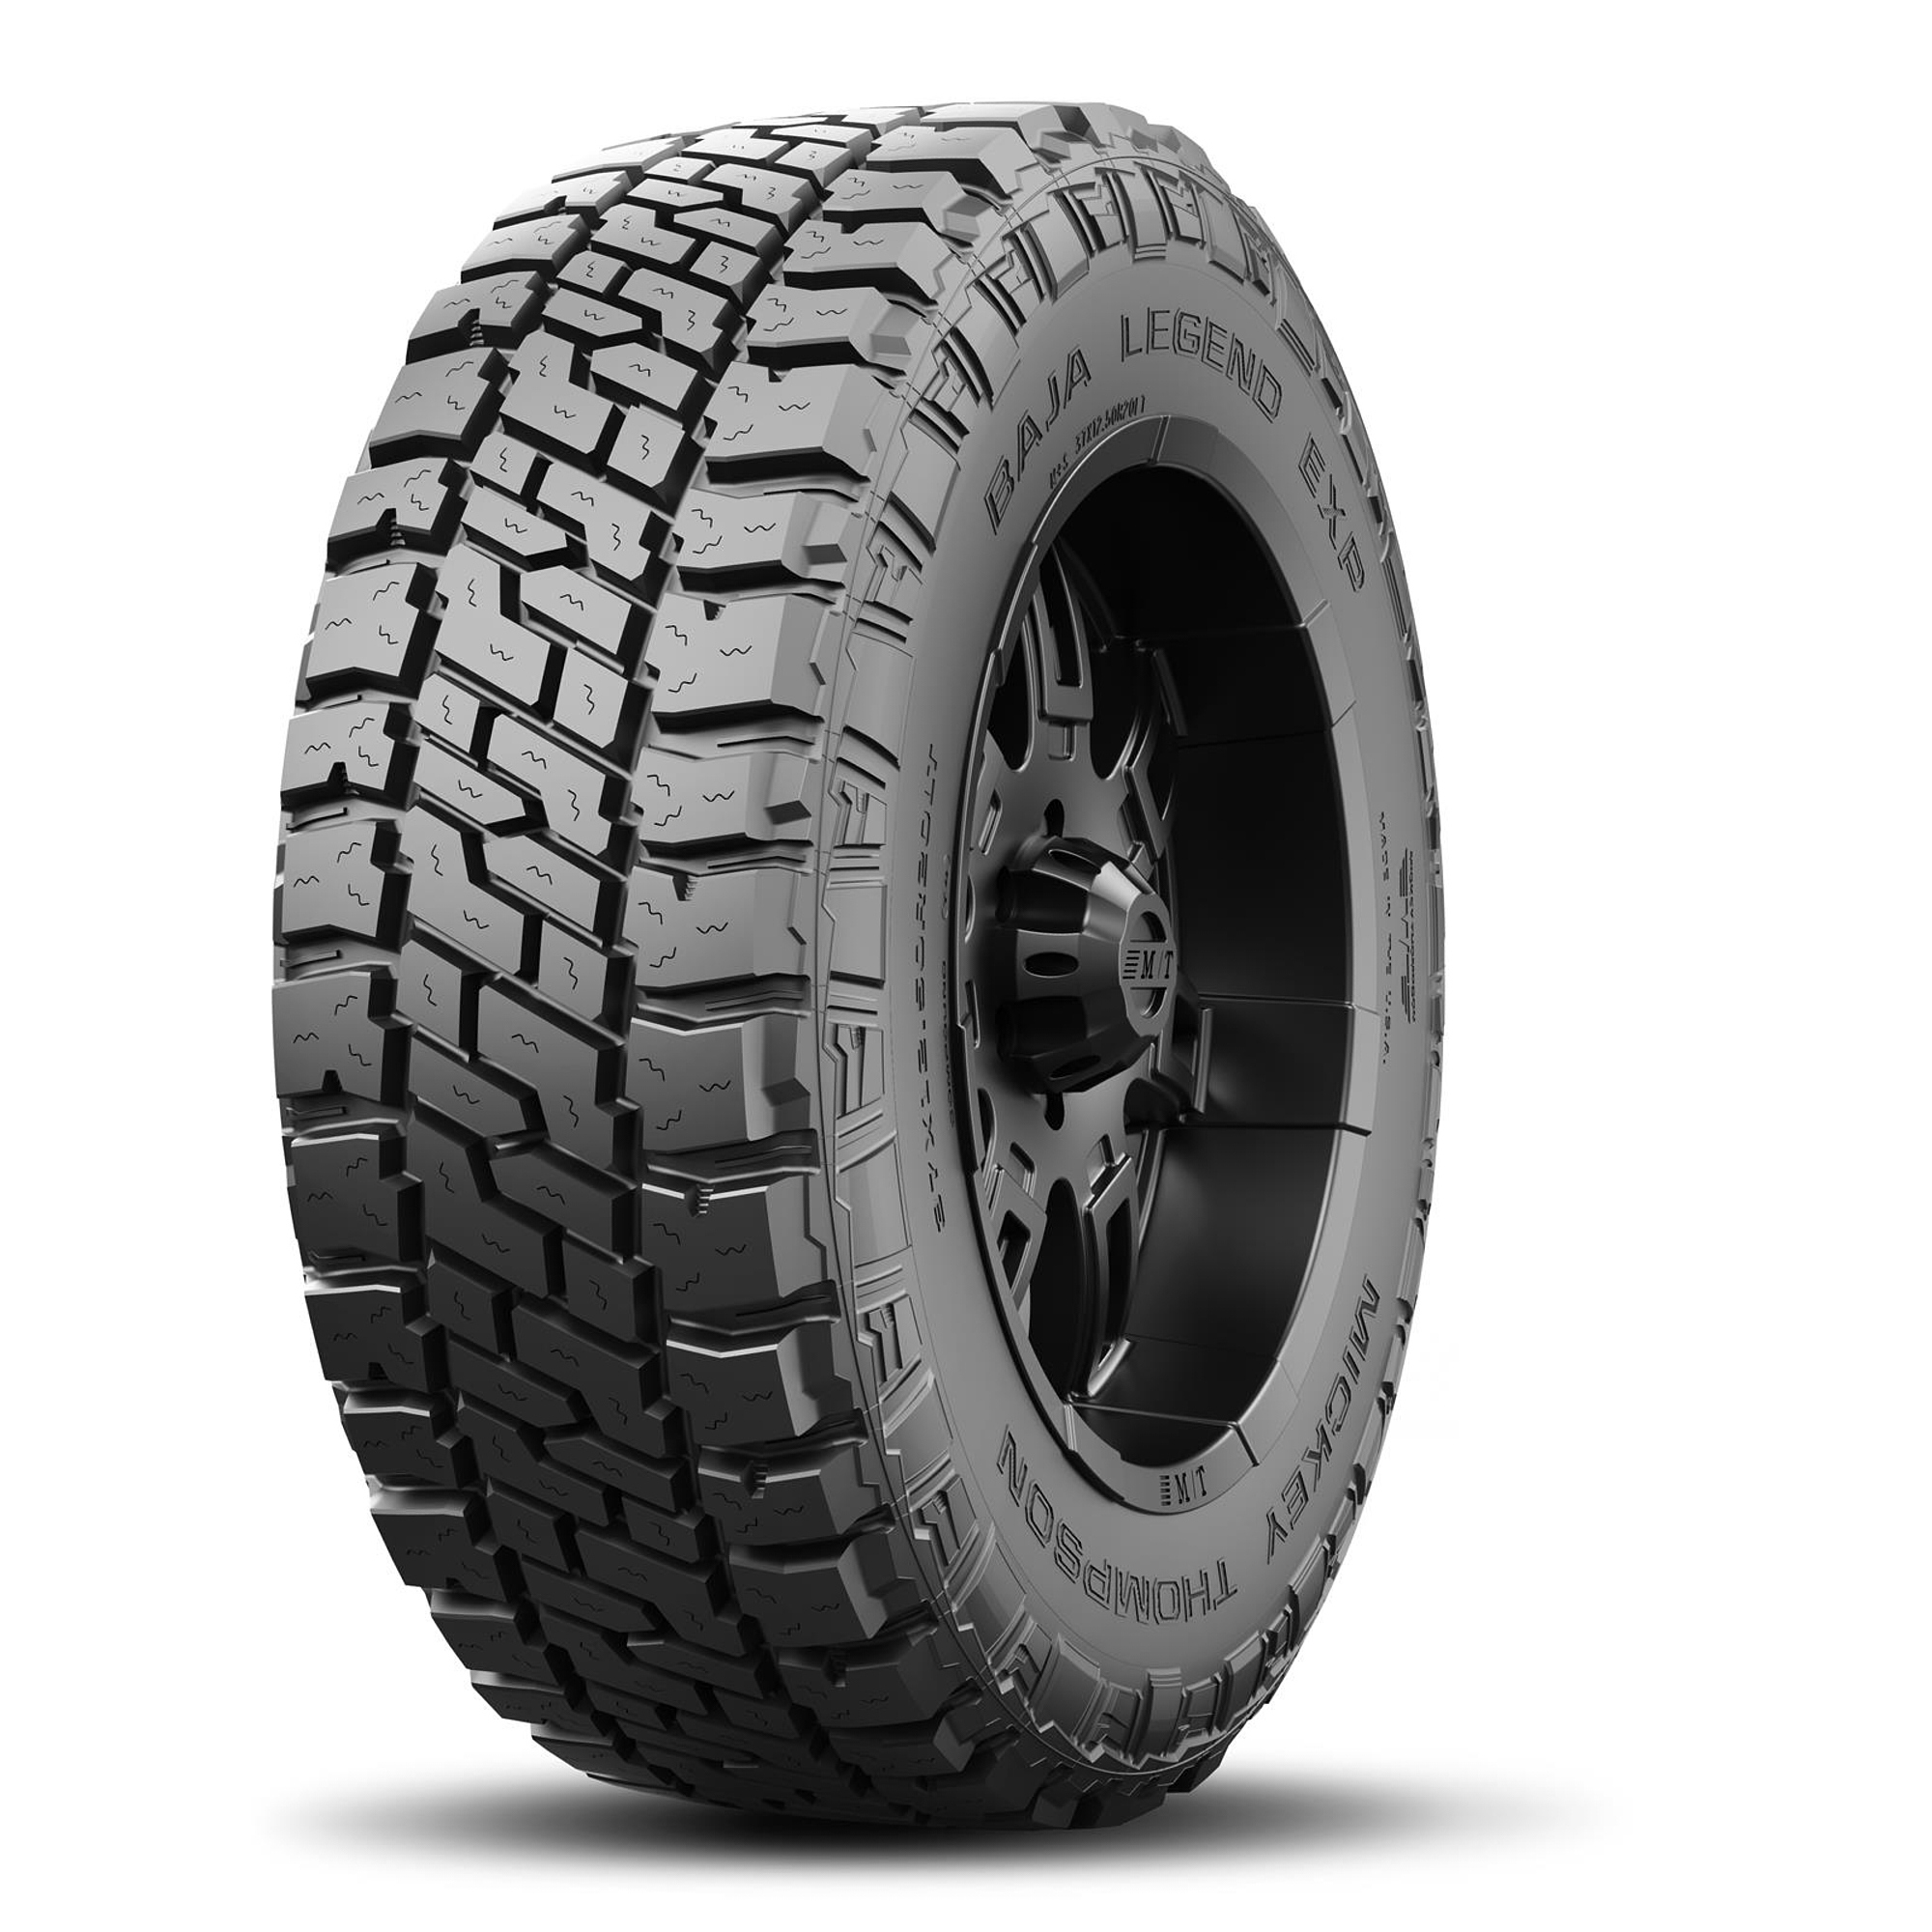 Baja Legend EXP Tire LT275/70R17 121/118Q - 249754